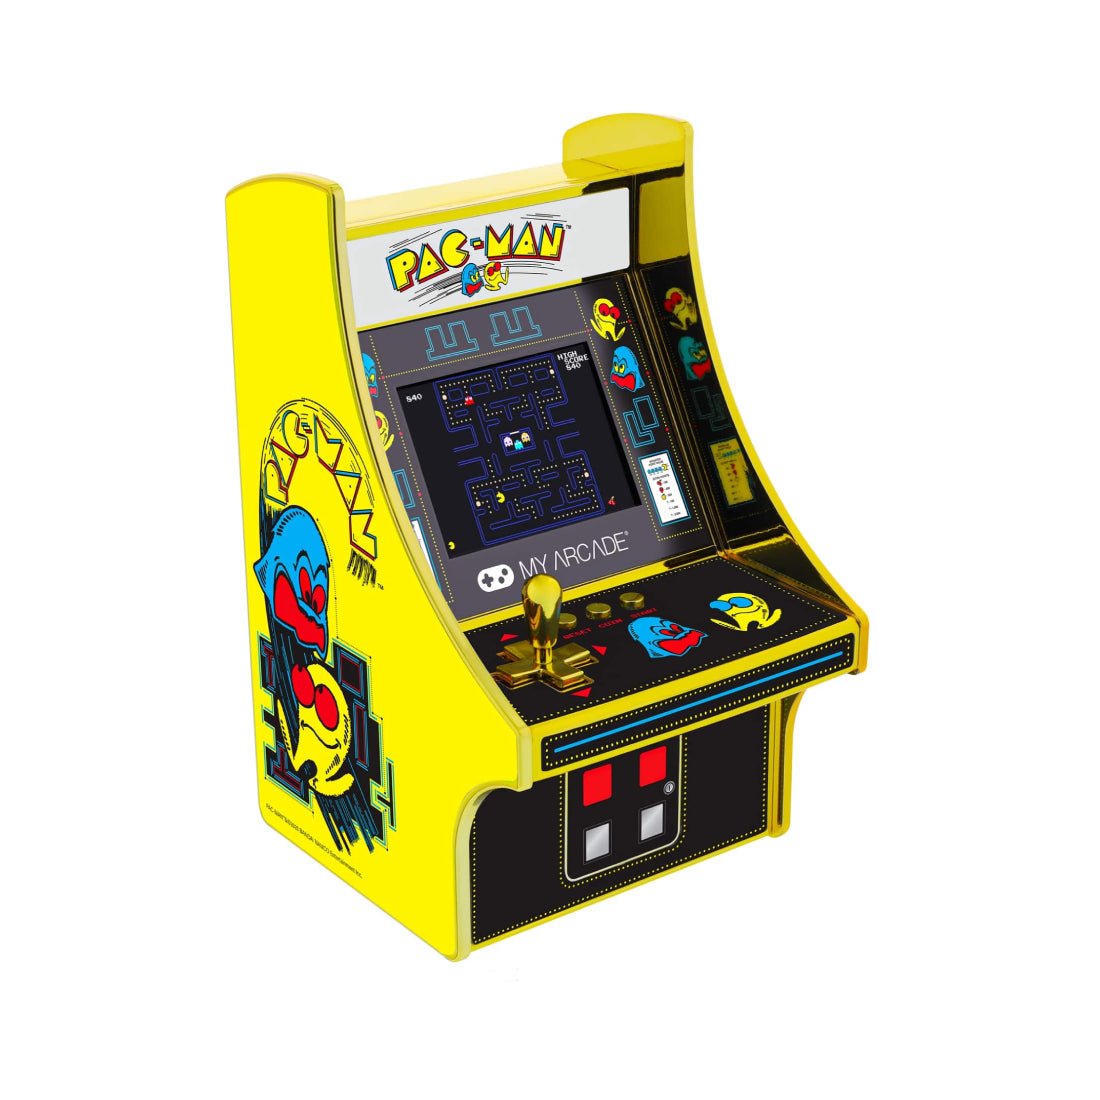 My Arcade Pac-man 40th Anniversary Micro Player Retro Arcade - جهاز ألعاب - Store 974 | ستور ٩٧٤